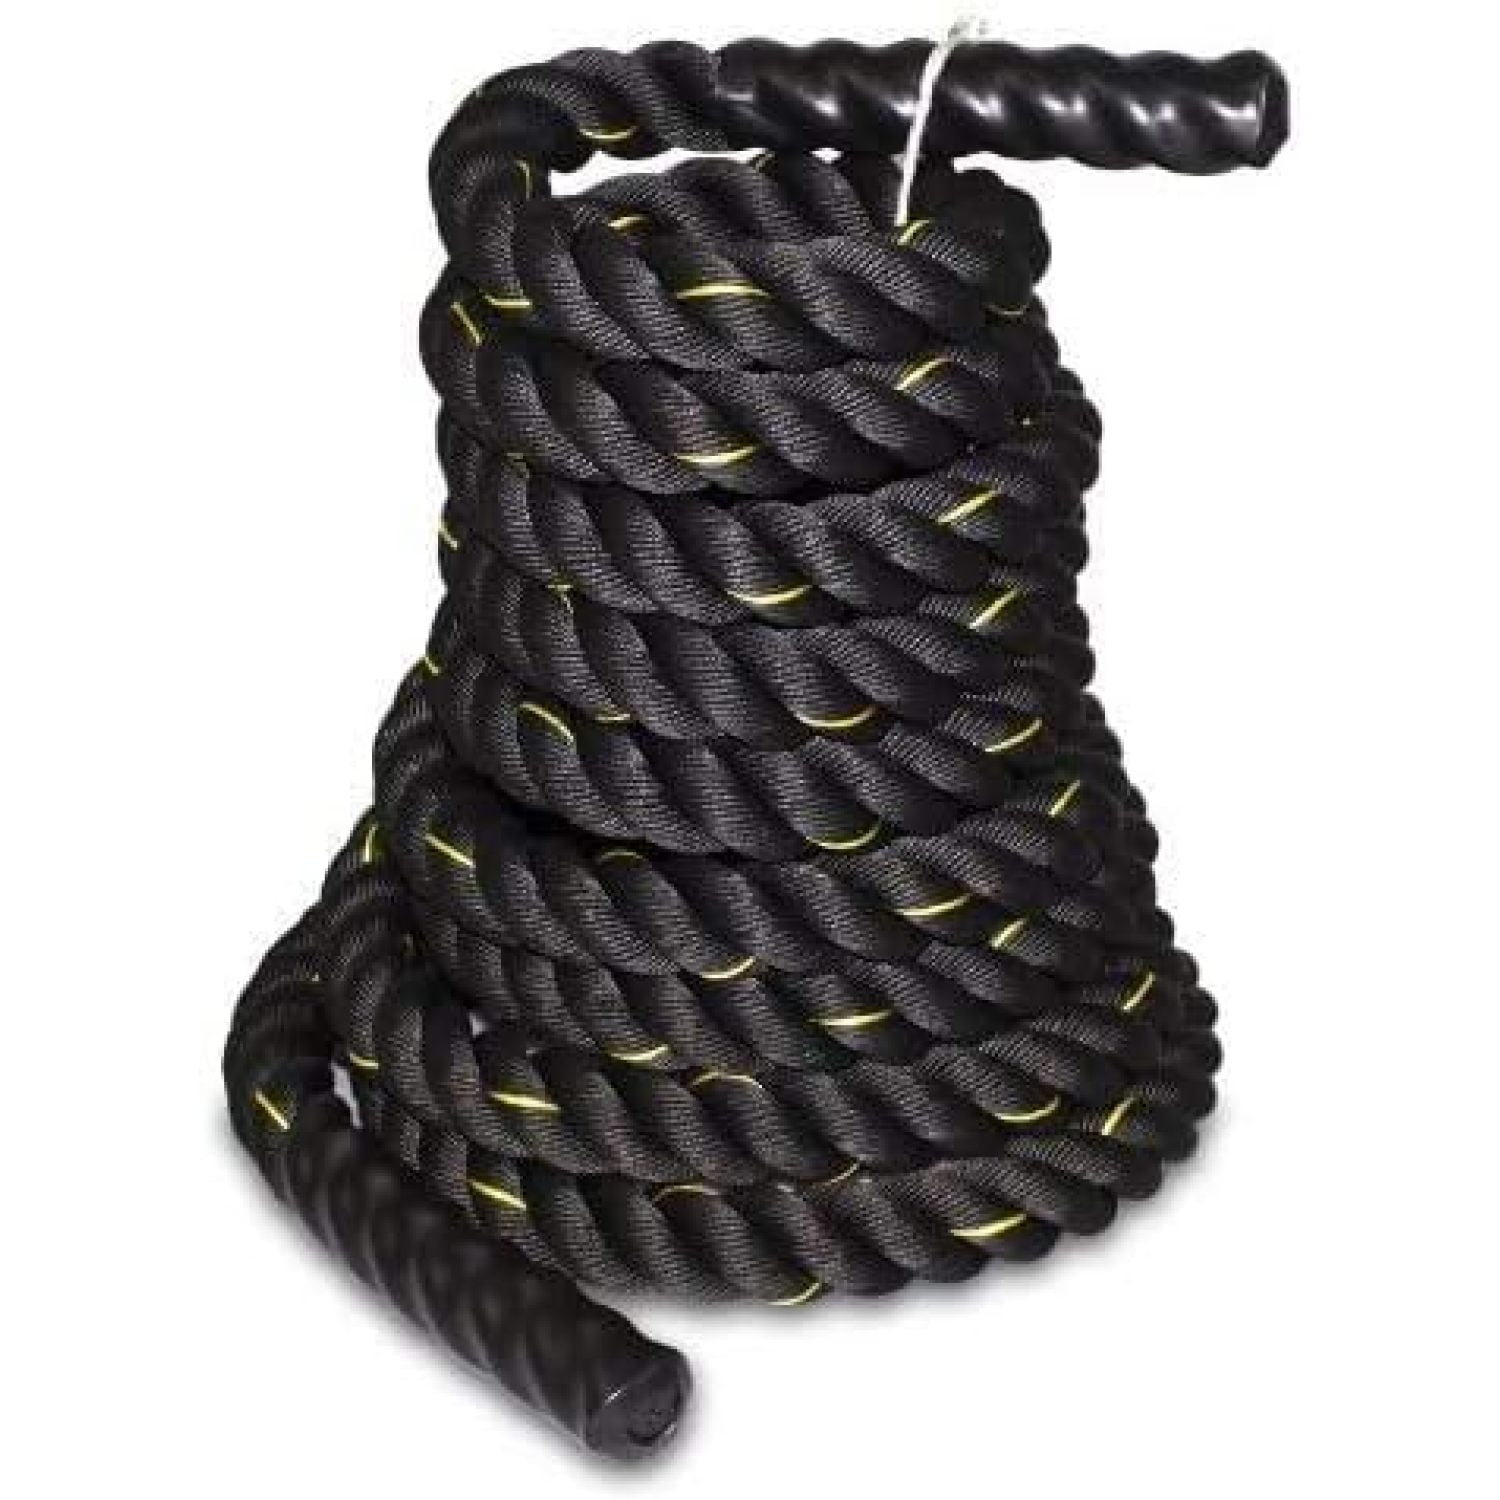 Battle rop outdoor, corde ondulatoire d'extérieur